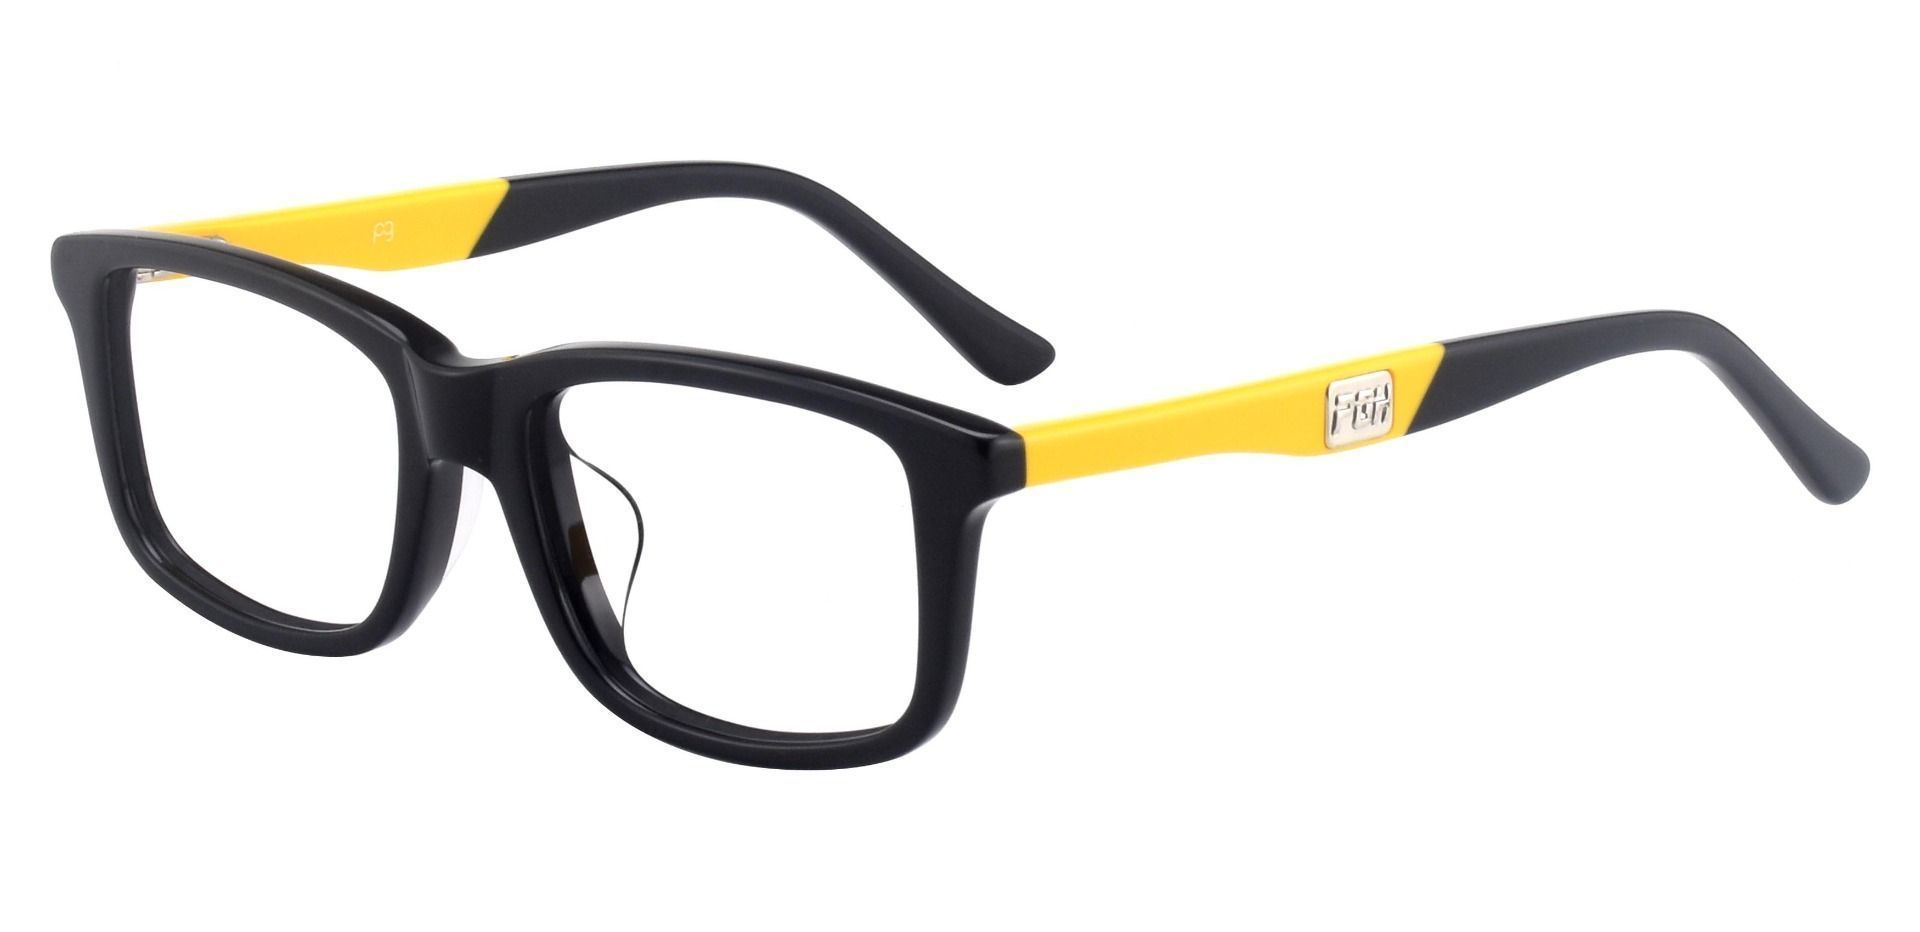 Allegheny Rectangle Non-Rx Glasses - Black-yellow